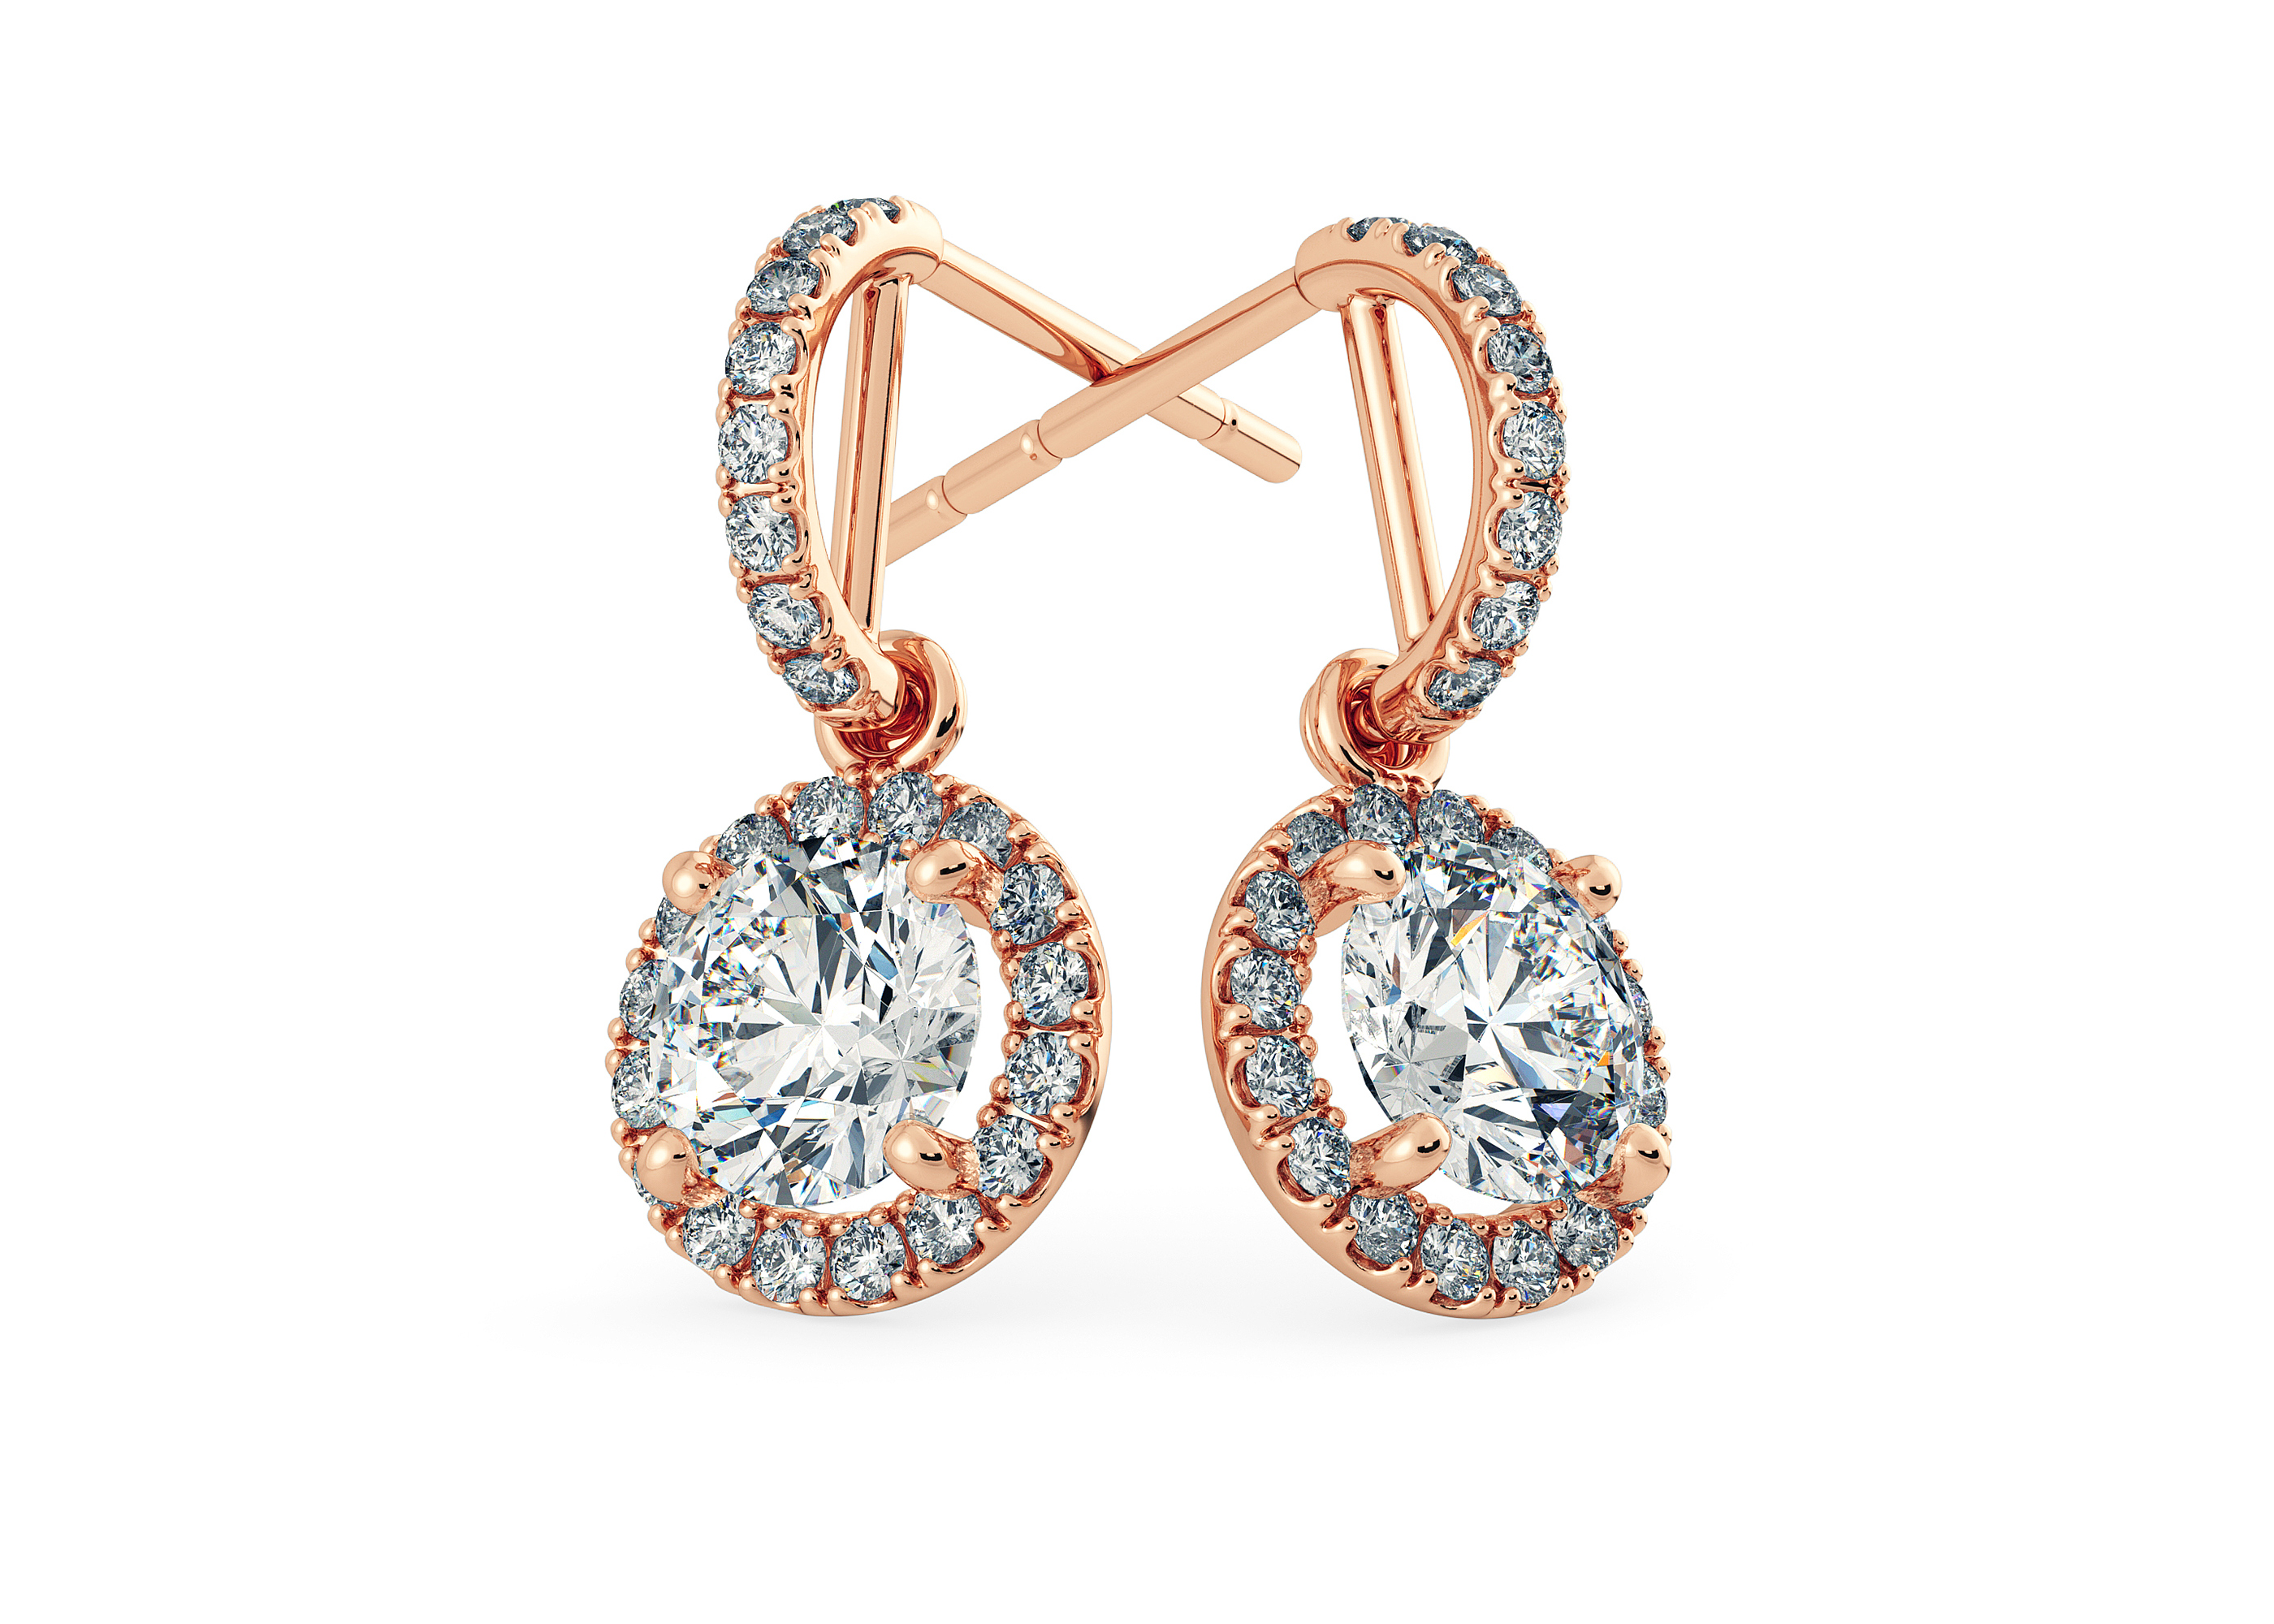 Bijou Round Brilliant Diamond Drop Earrings in 18K Rose Gold with Butterfly Backs